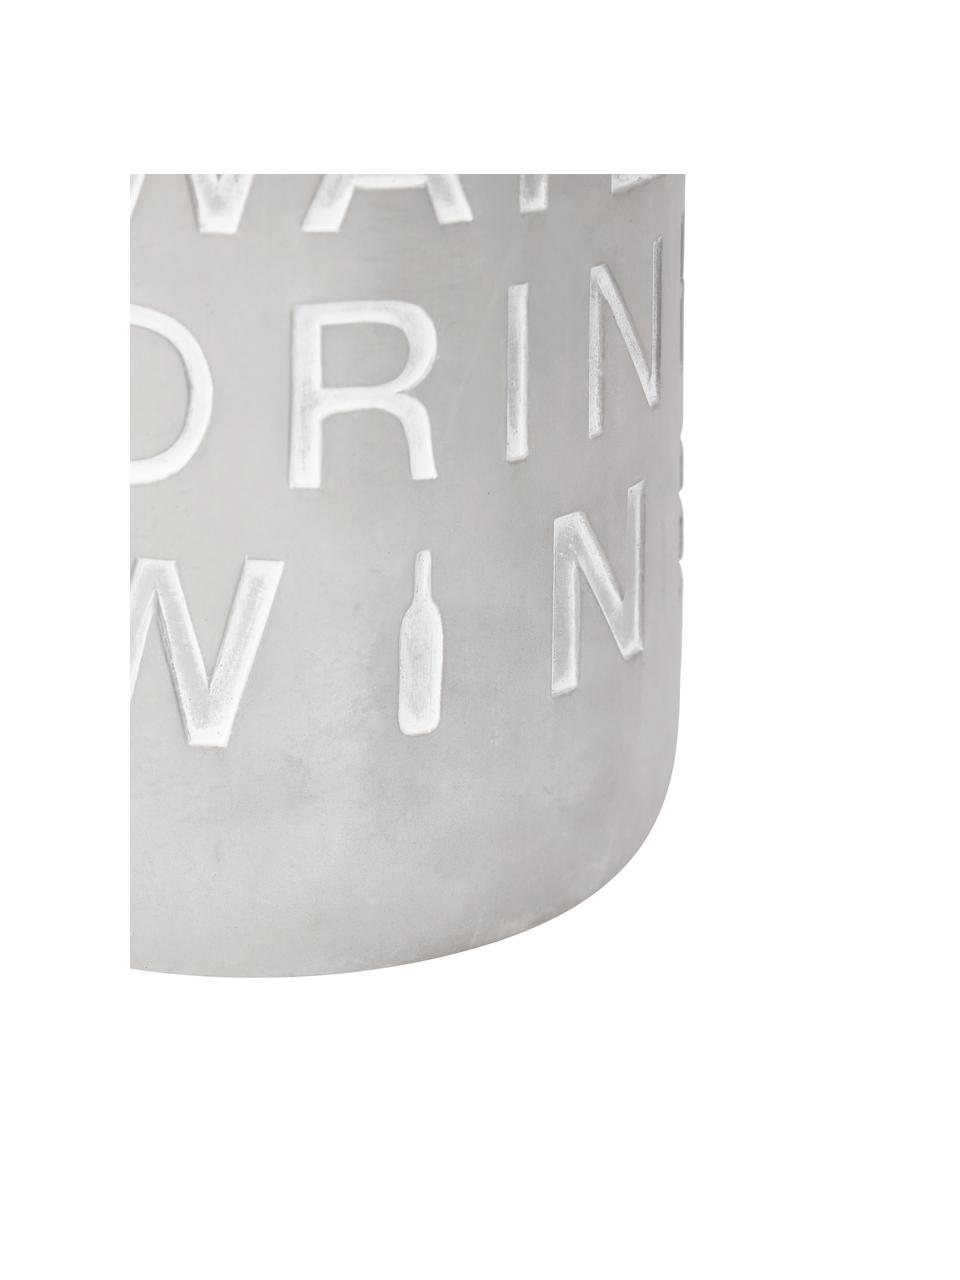 Chladič fliaš Drink Wine, Betón, Sivá, biela, Ø 14 x V 21 cm